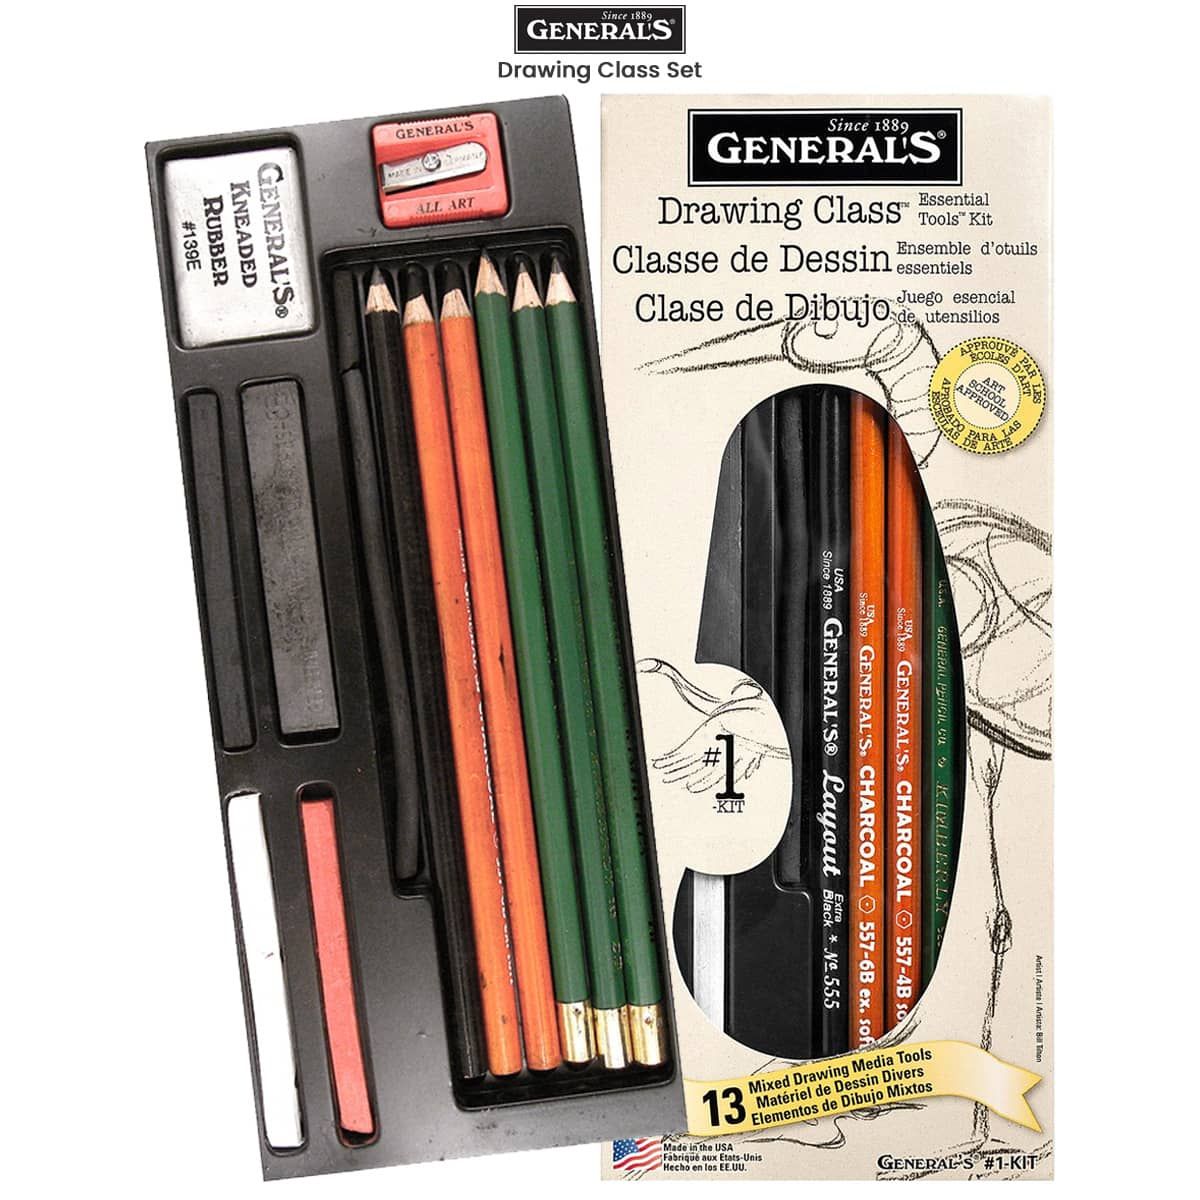 Generals Mini Drawing Kit - Set of 5 Includes 3 Drawing Pencils